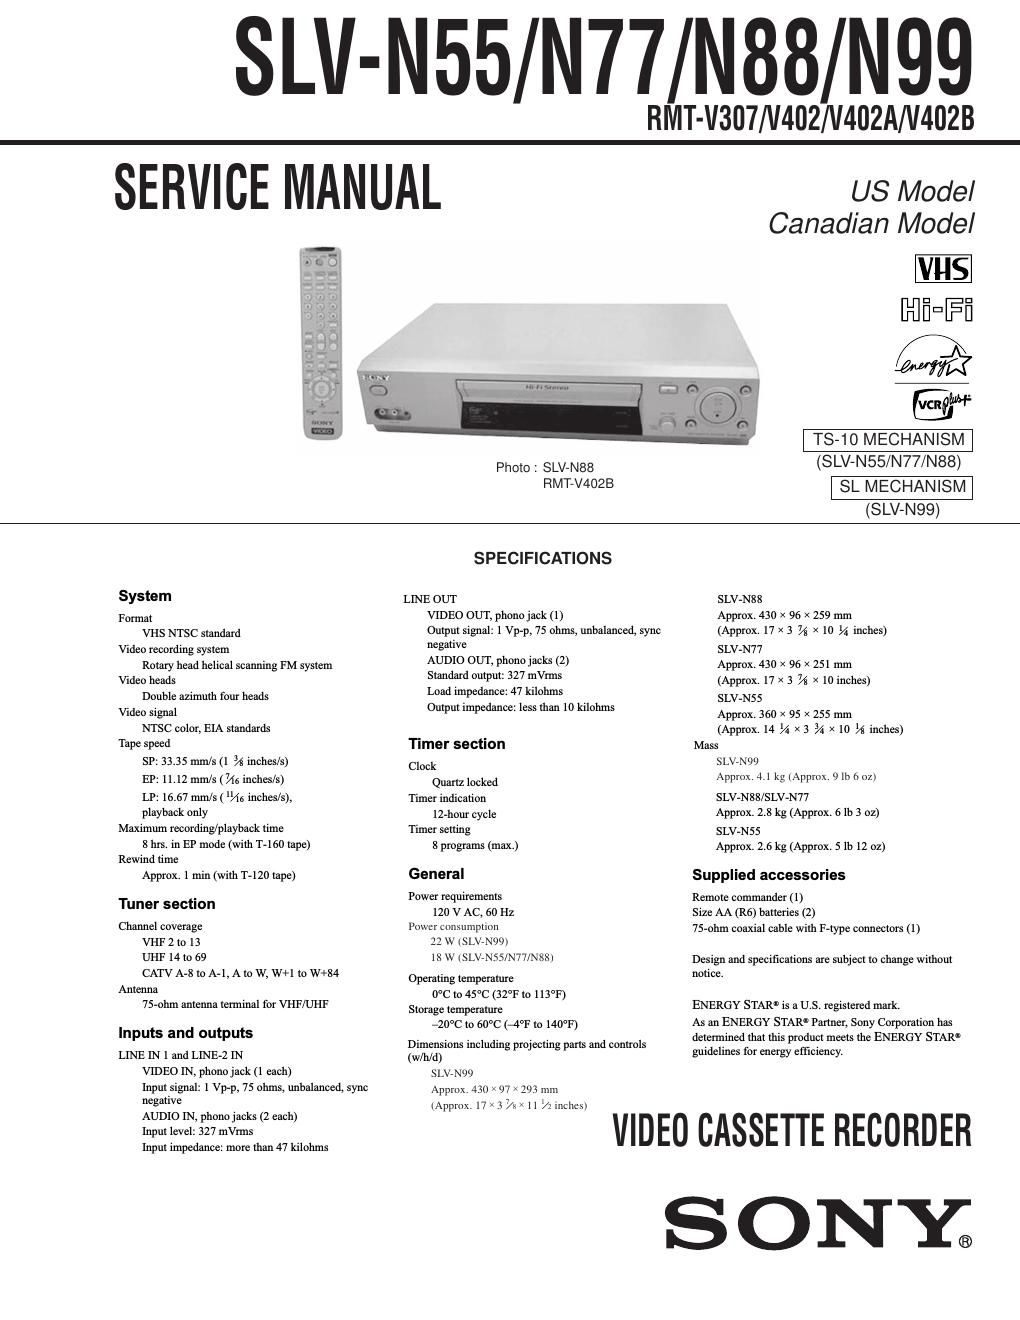 sony slv n 99 service manual